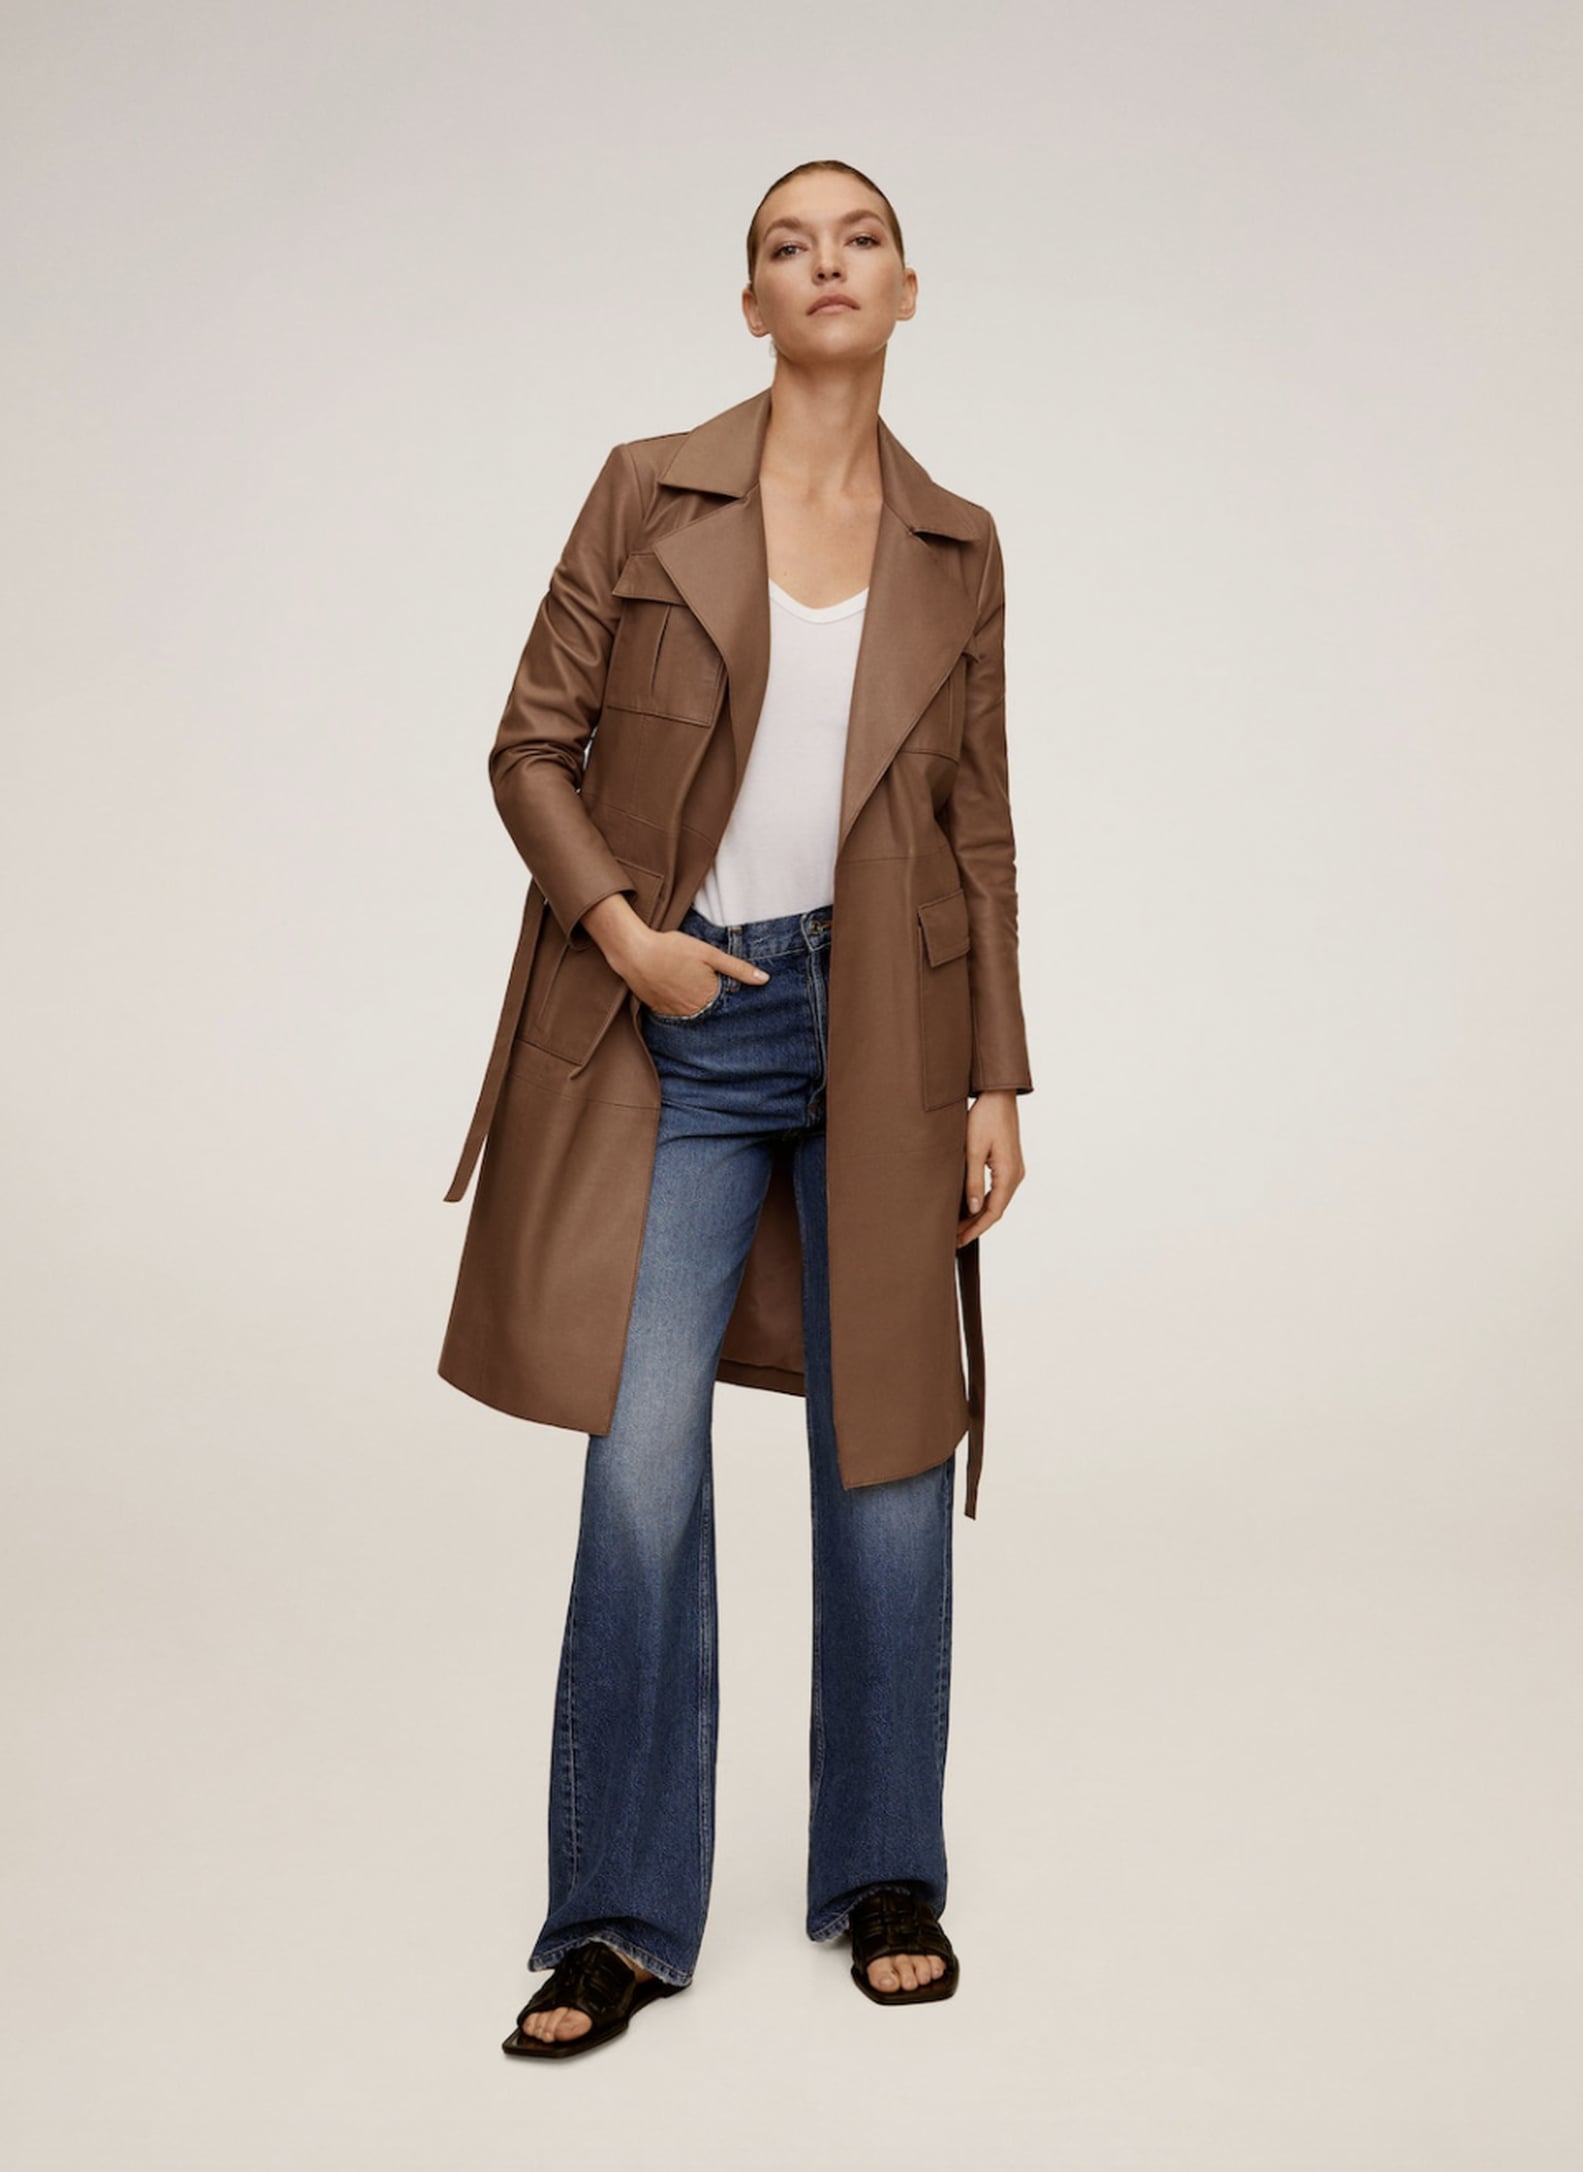 6 Winter Coat Trends For Women 2021-2022 | POPSUGAR Fashion